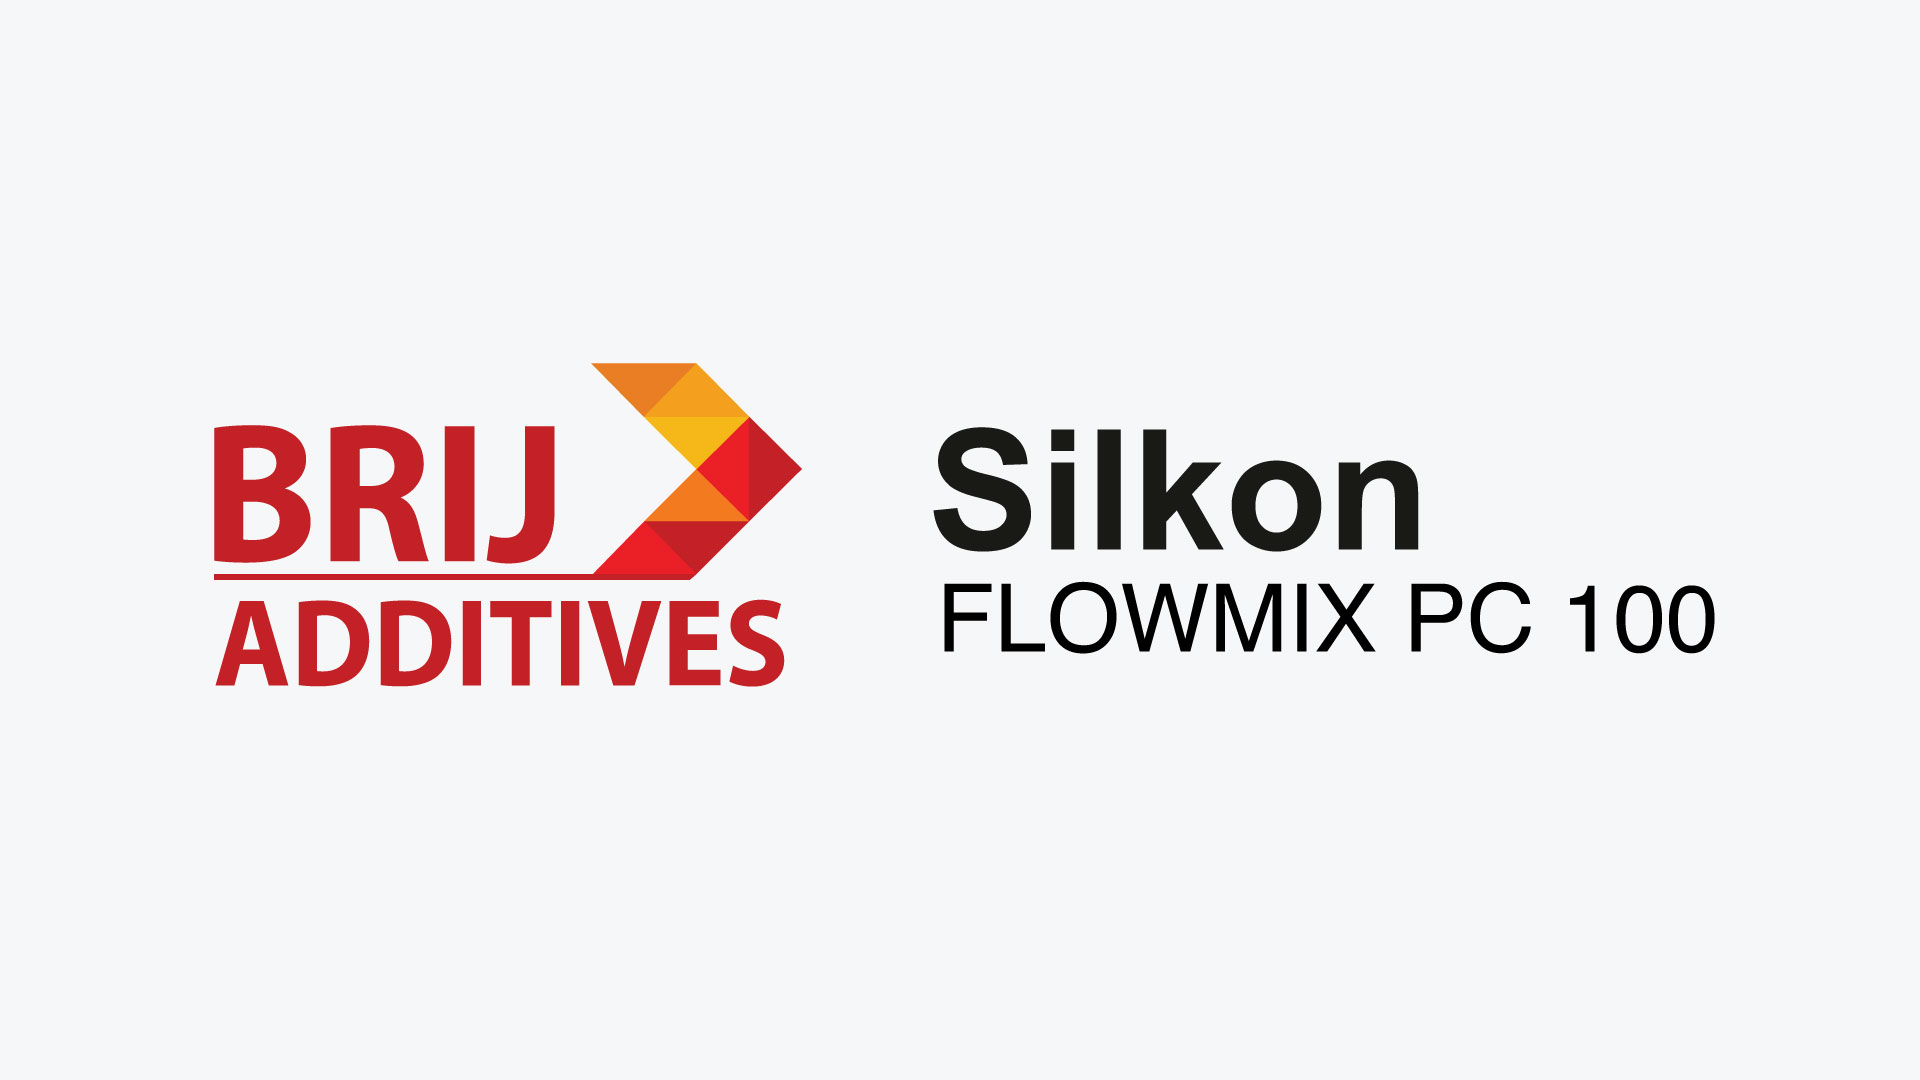 Silkon Flowmix PC 100